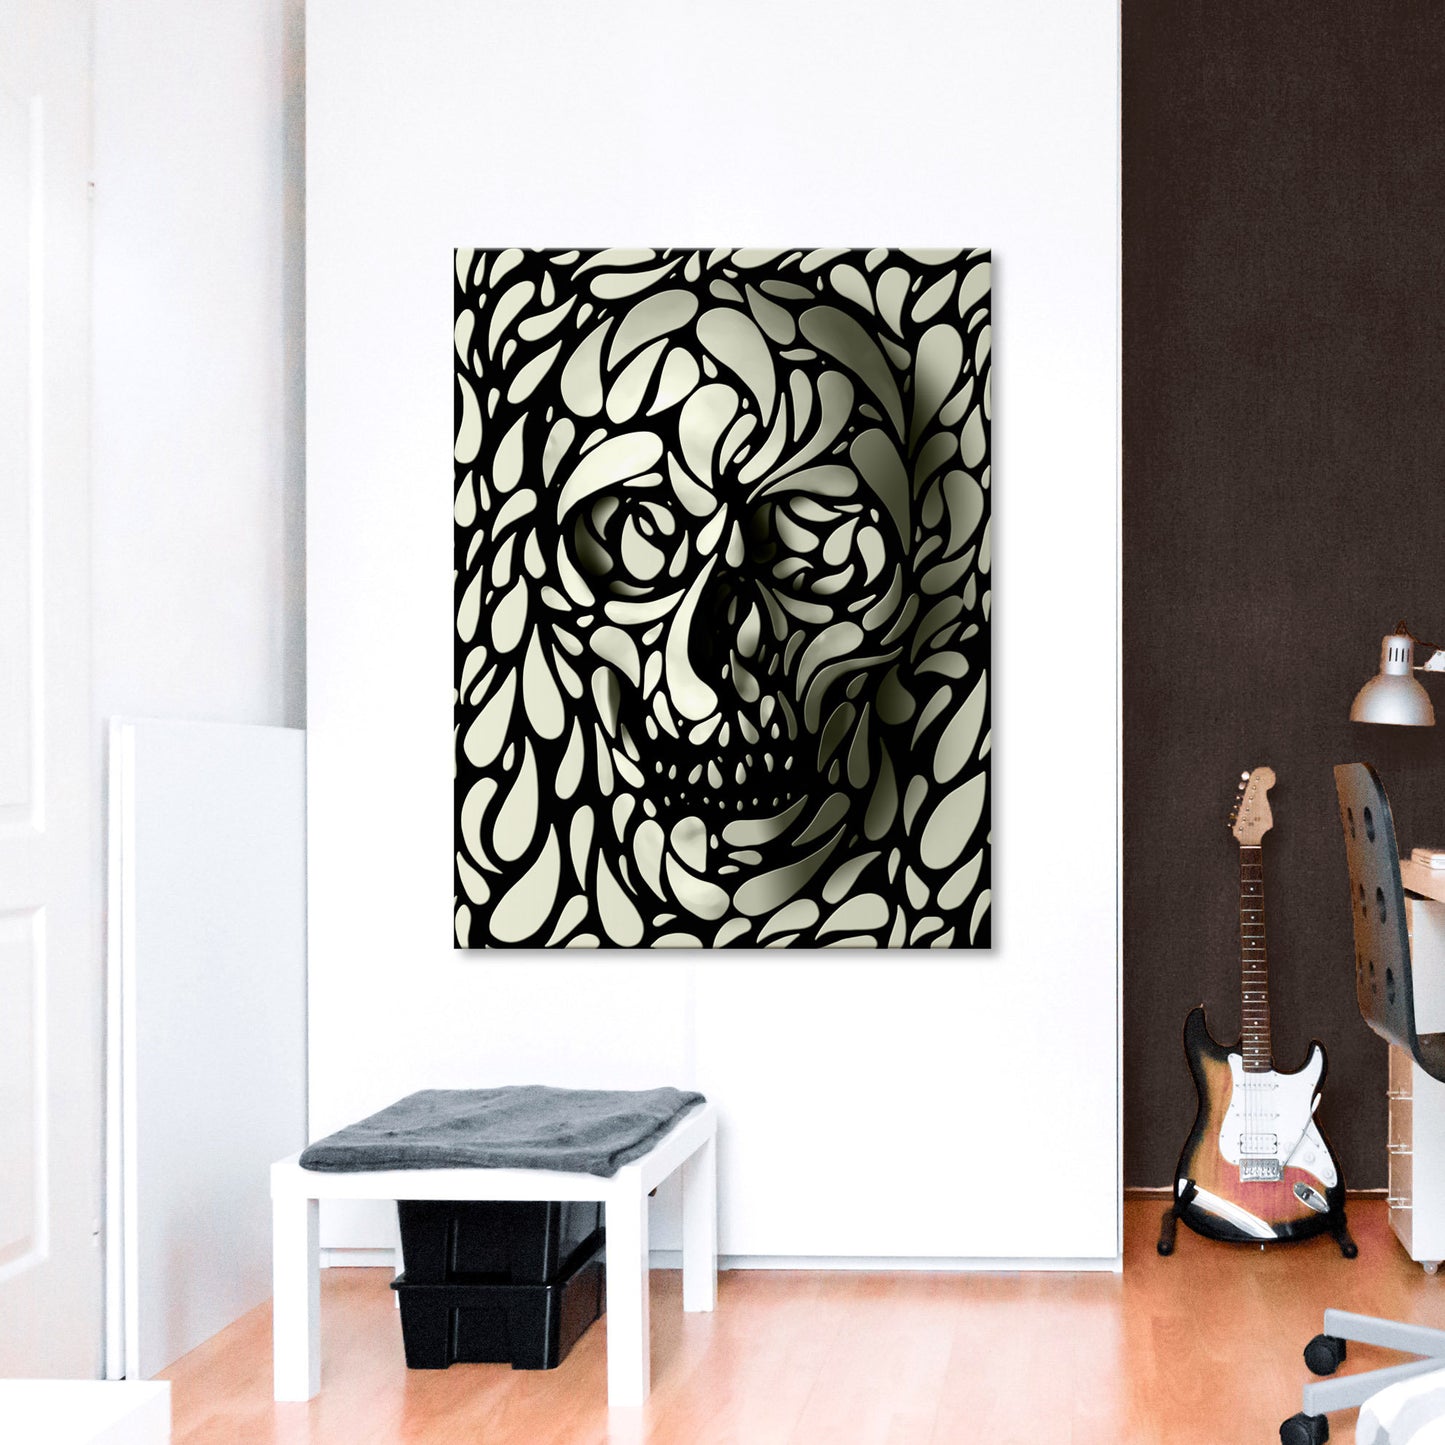 Trippy Skull Canvas Print, Black And White Skull Canvas Art Print, Gothic Sugar Skull Art, Canvas Home Decor Gift, Paisley Skull Wall Art